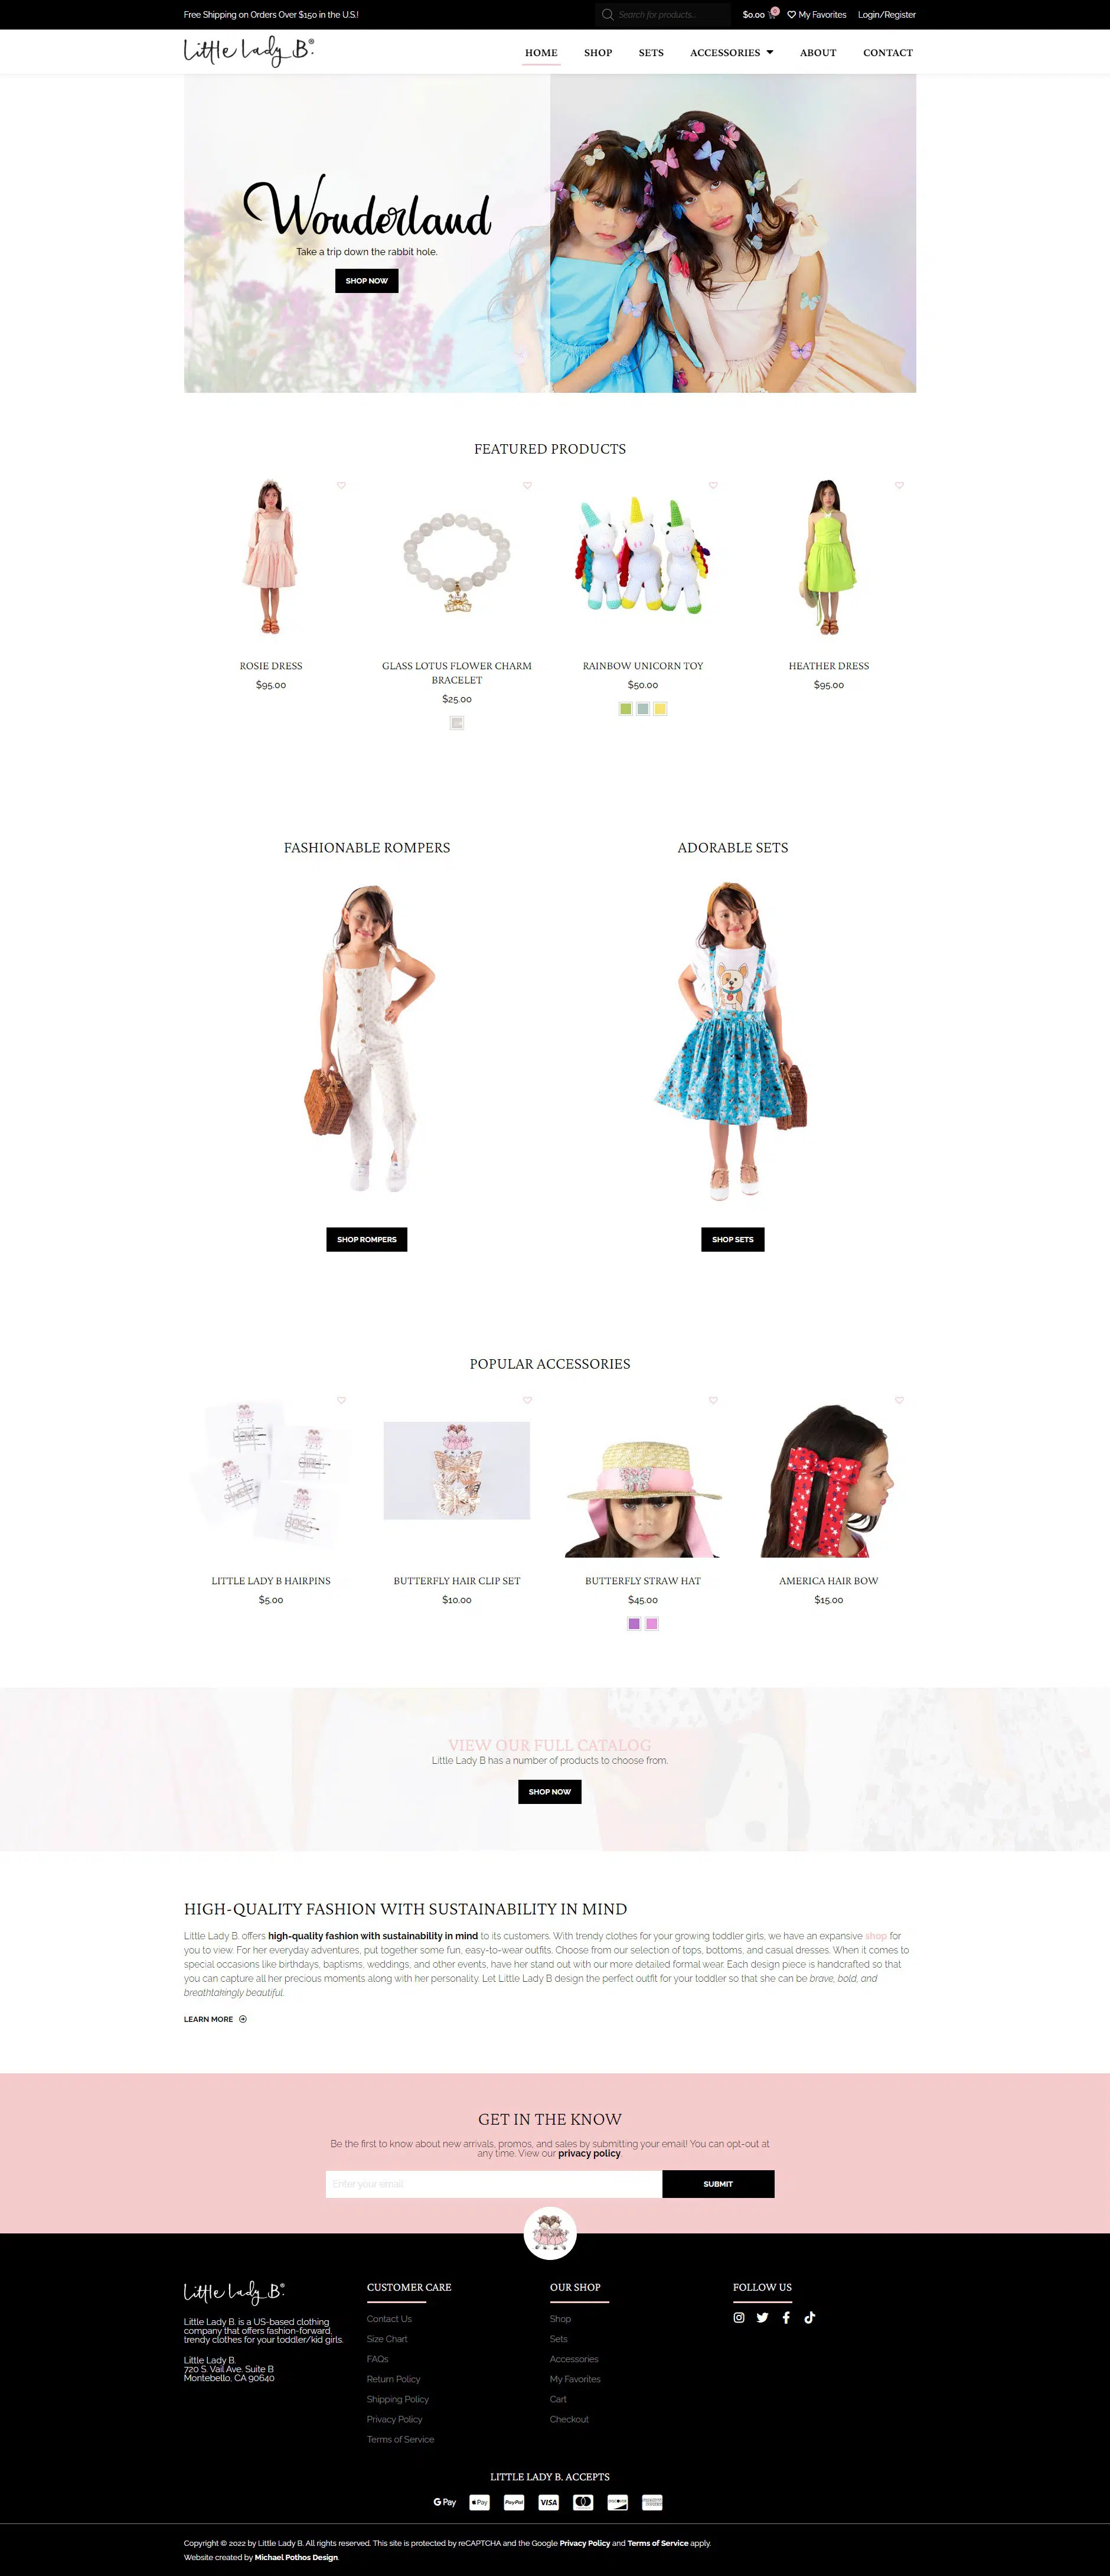 Smart Web Creative - eCommerce Clothing Company Website 01